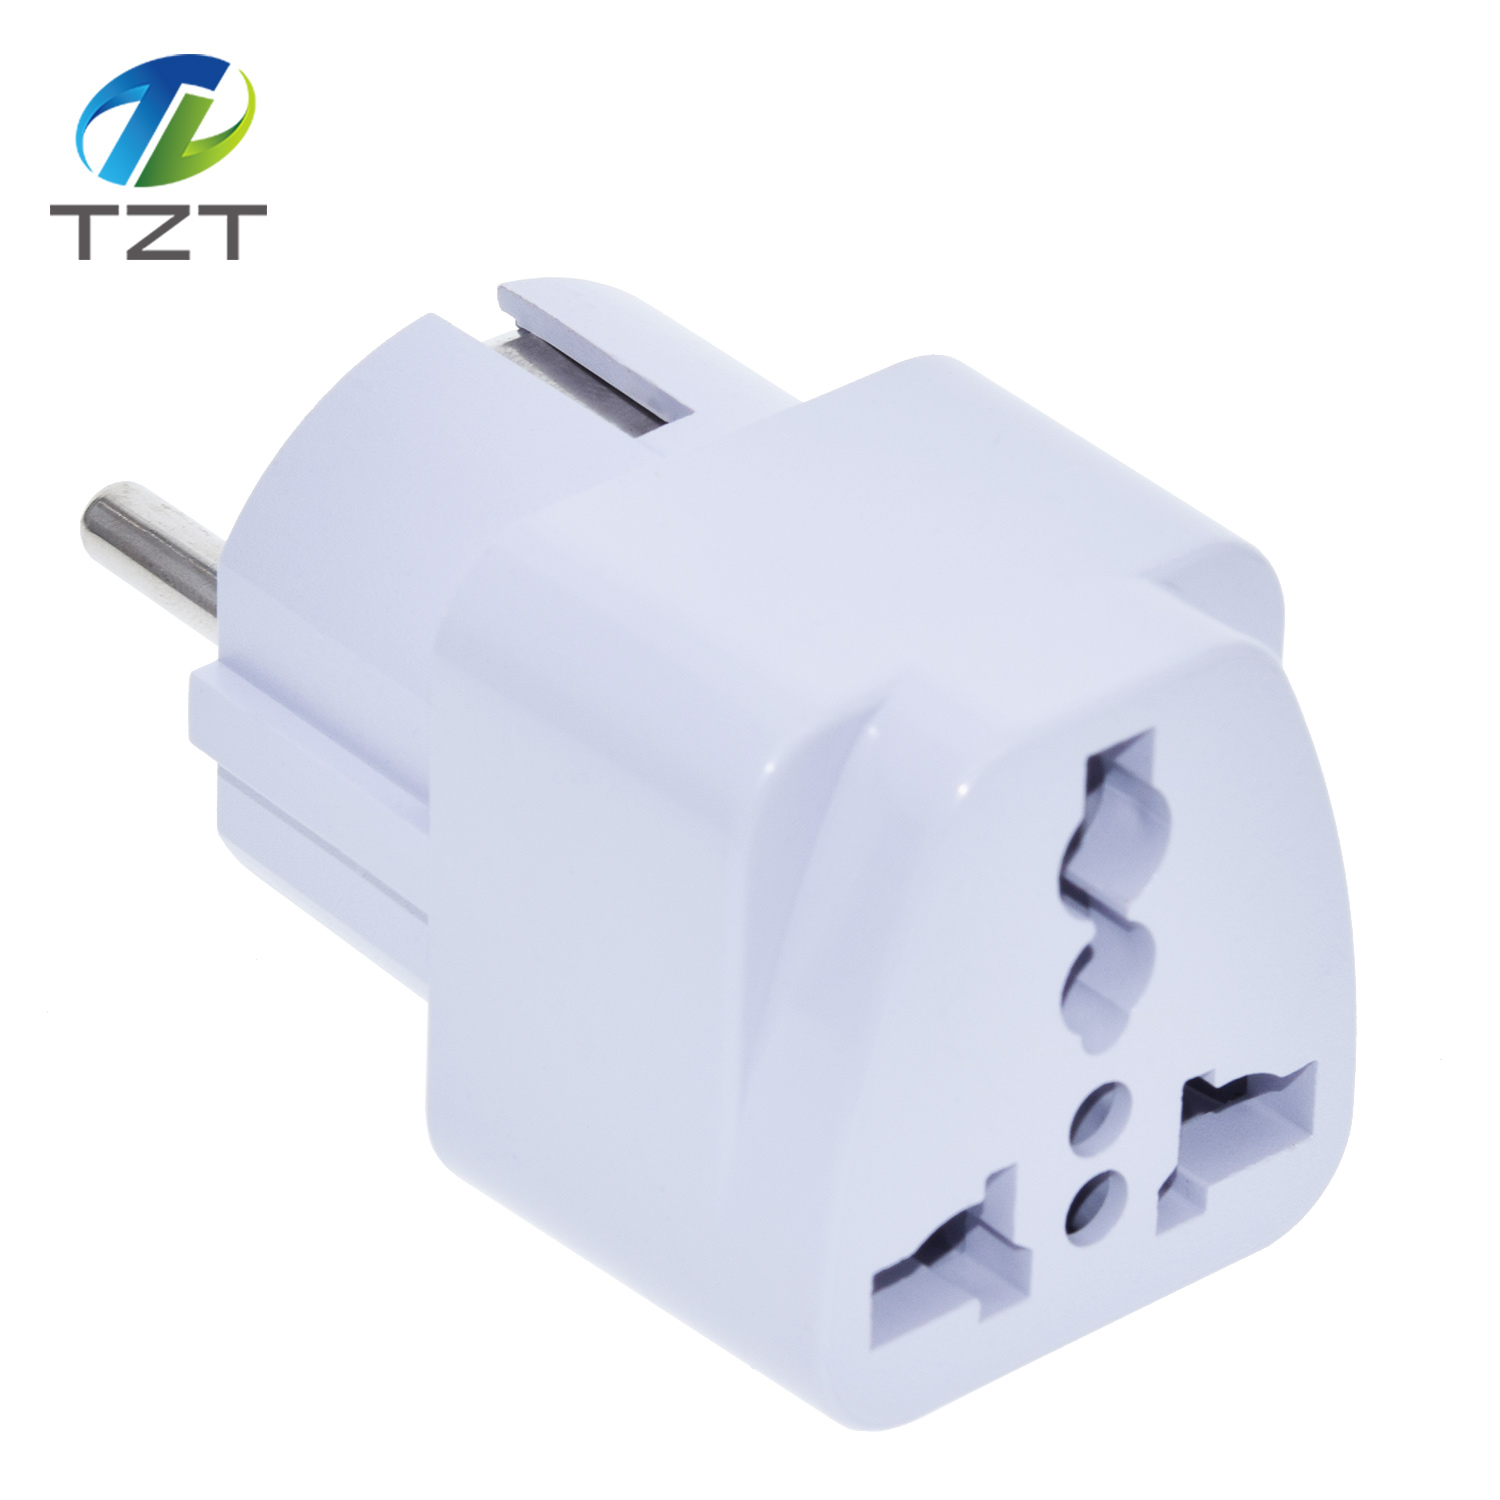 TZT New Arrival 2016 Best Price Universal UK US AU to EU AC Power Socket Plug Travel Charger Adapter Converter Jun30